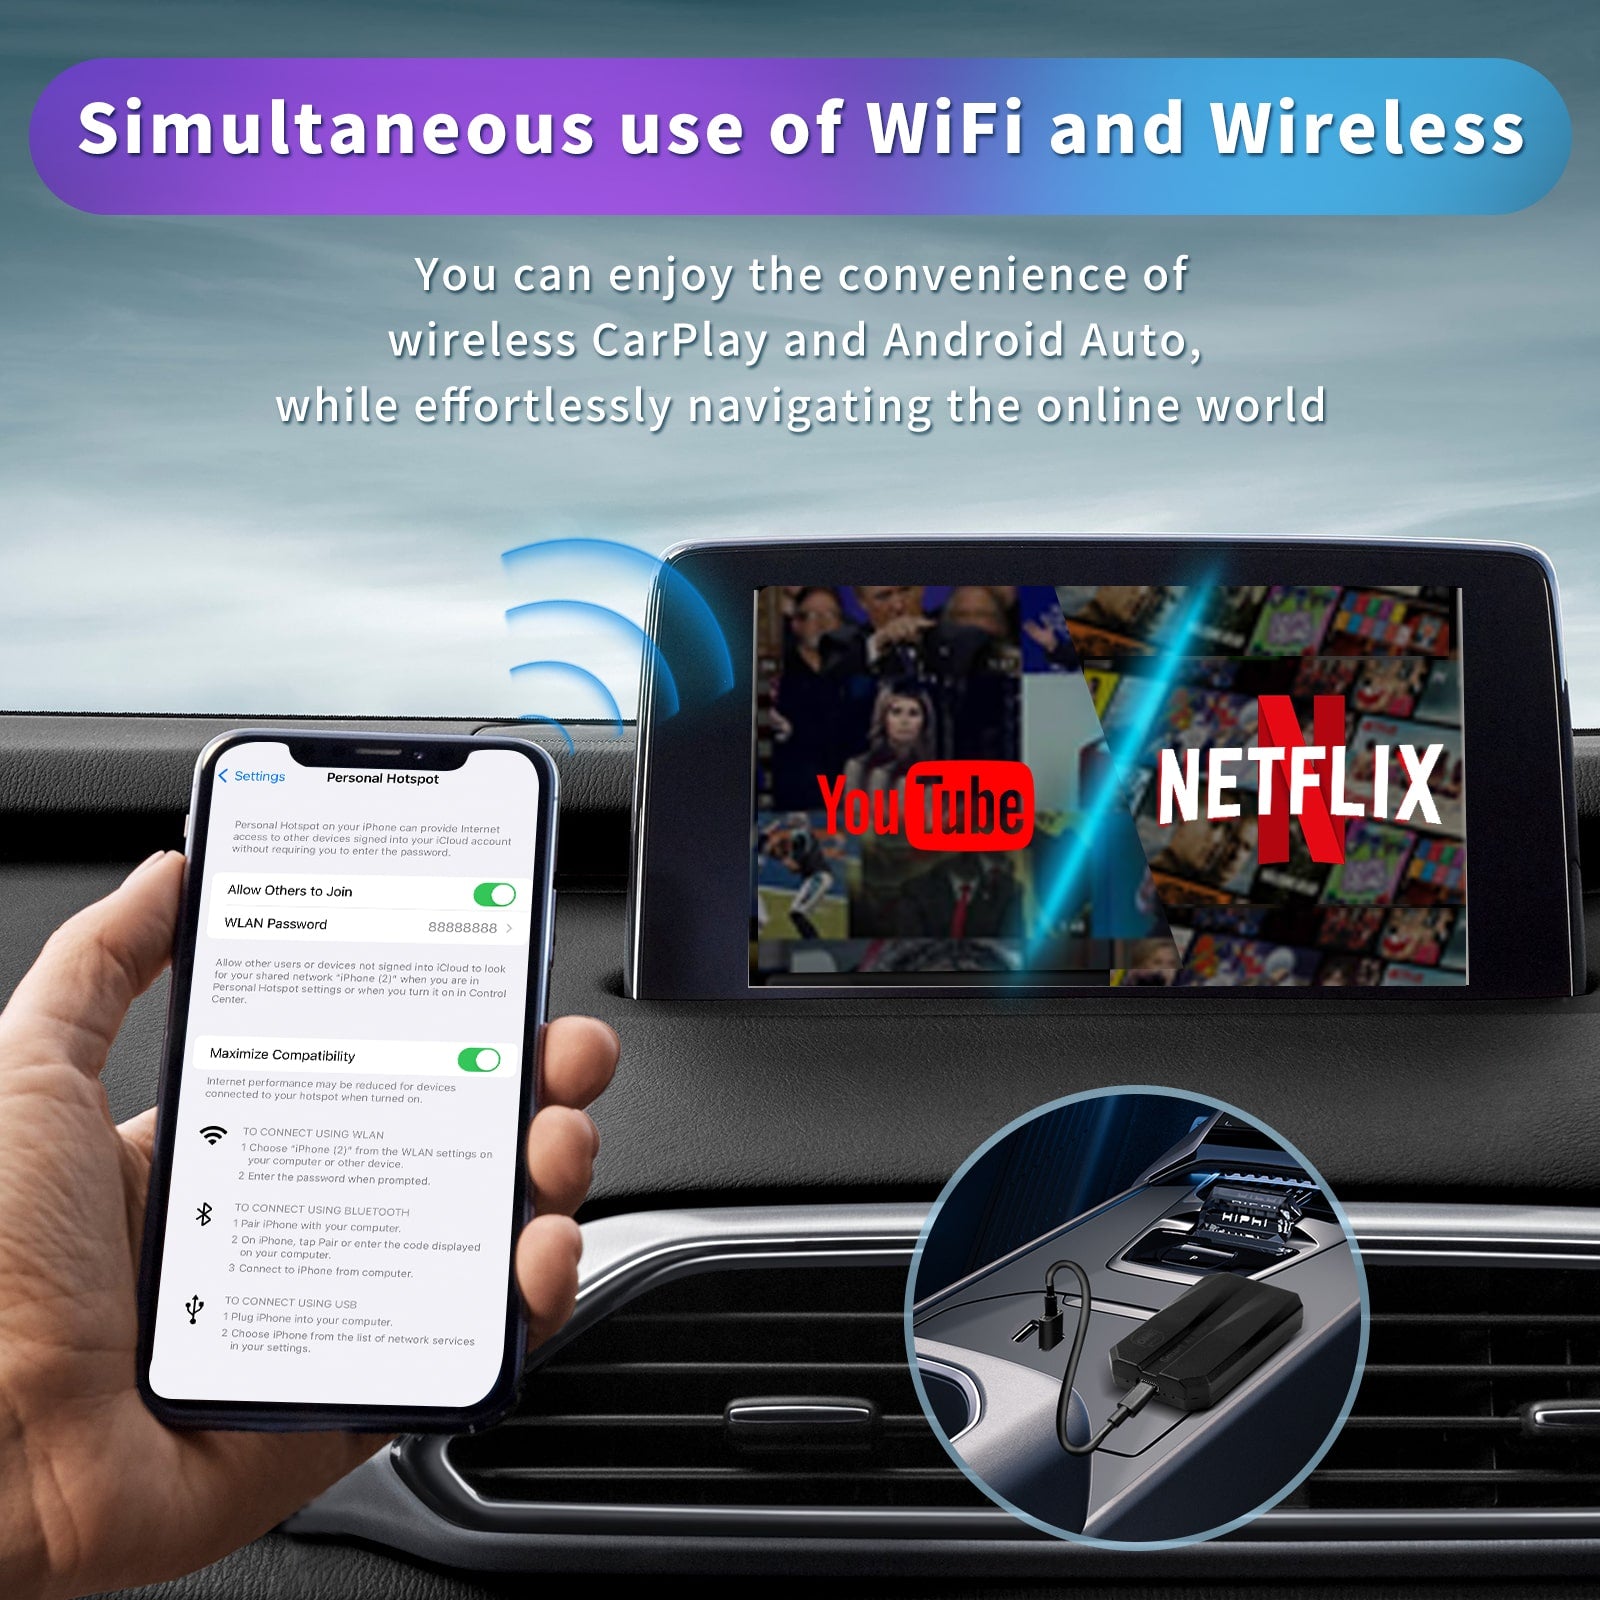 Linkifun GT6 Android 12 Smart AI Box Wireless Carplay/ Android Auto Ad